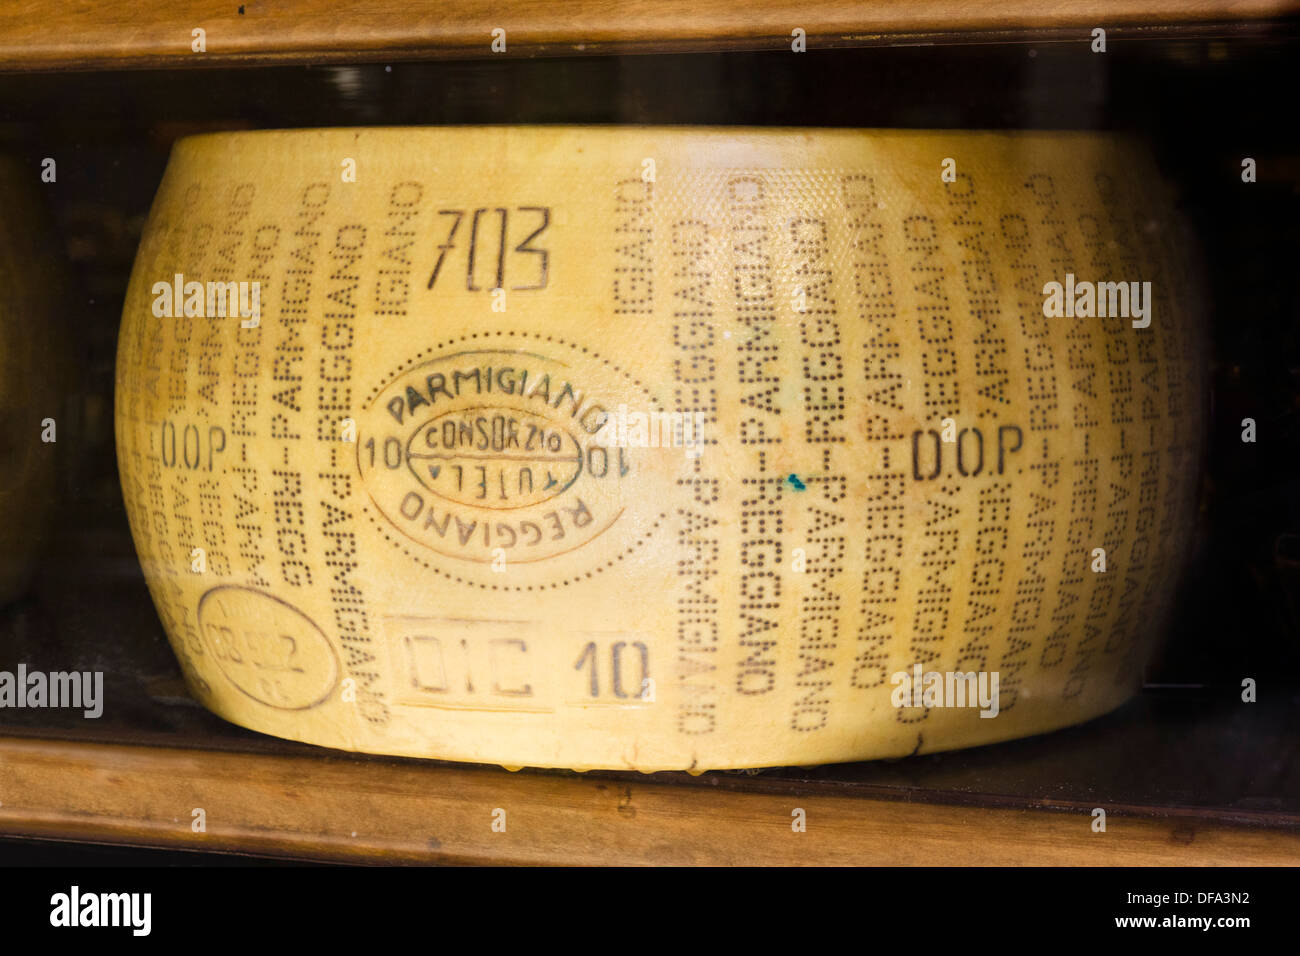 Whole wheel of Parmigiano Reggiano cheese, Reggio Emilia, Emilia Romagna, Italy Stock Photo